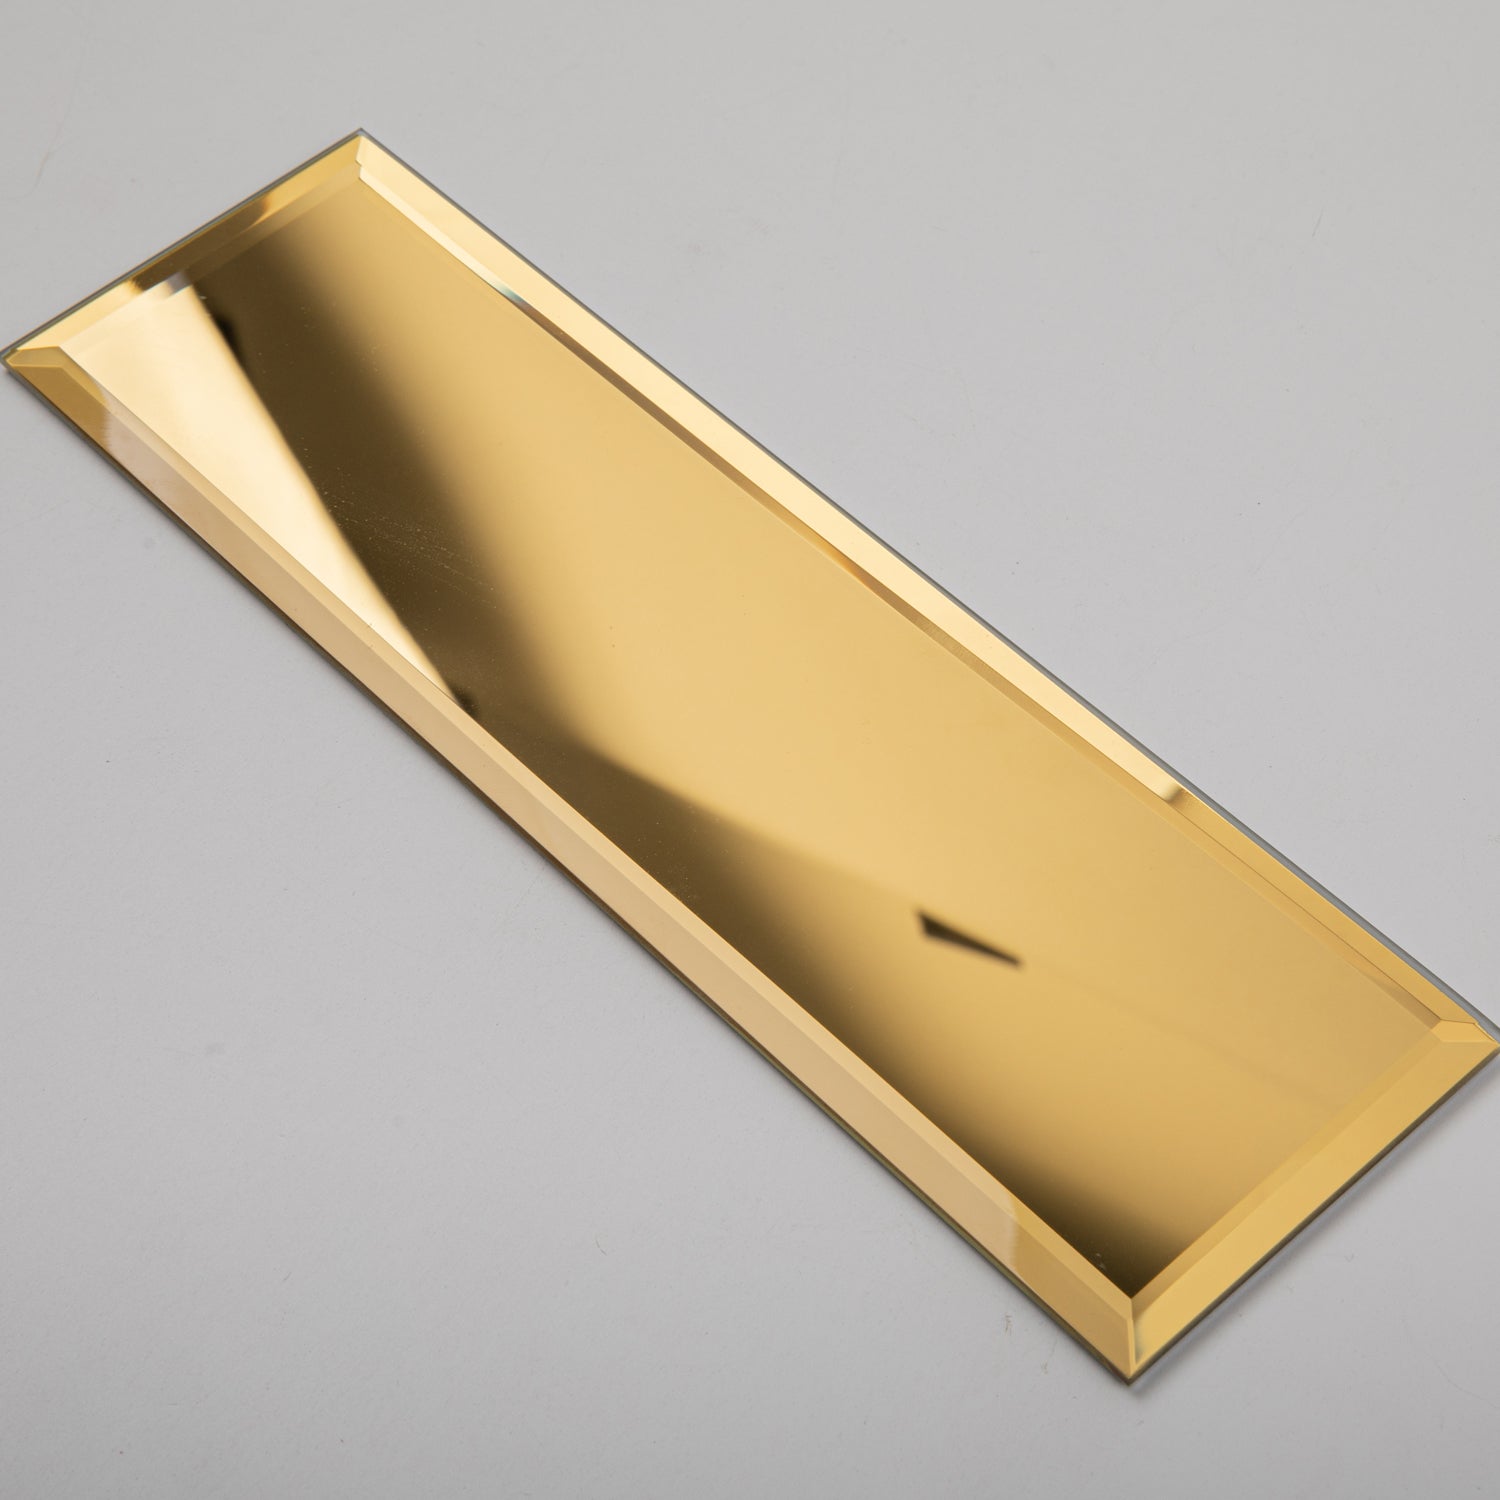 Beveled Gold Mirror Backsplash Subway Tiles 4x12 Inch Peel and Stick Pack of 15 Pcs